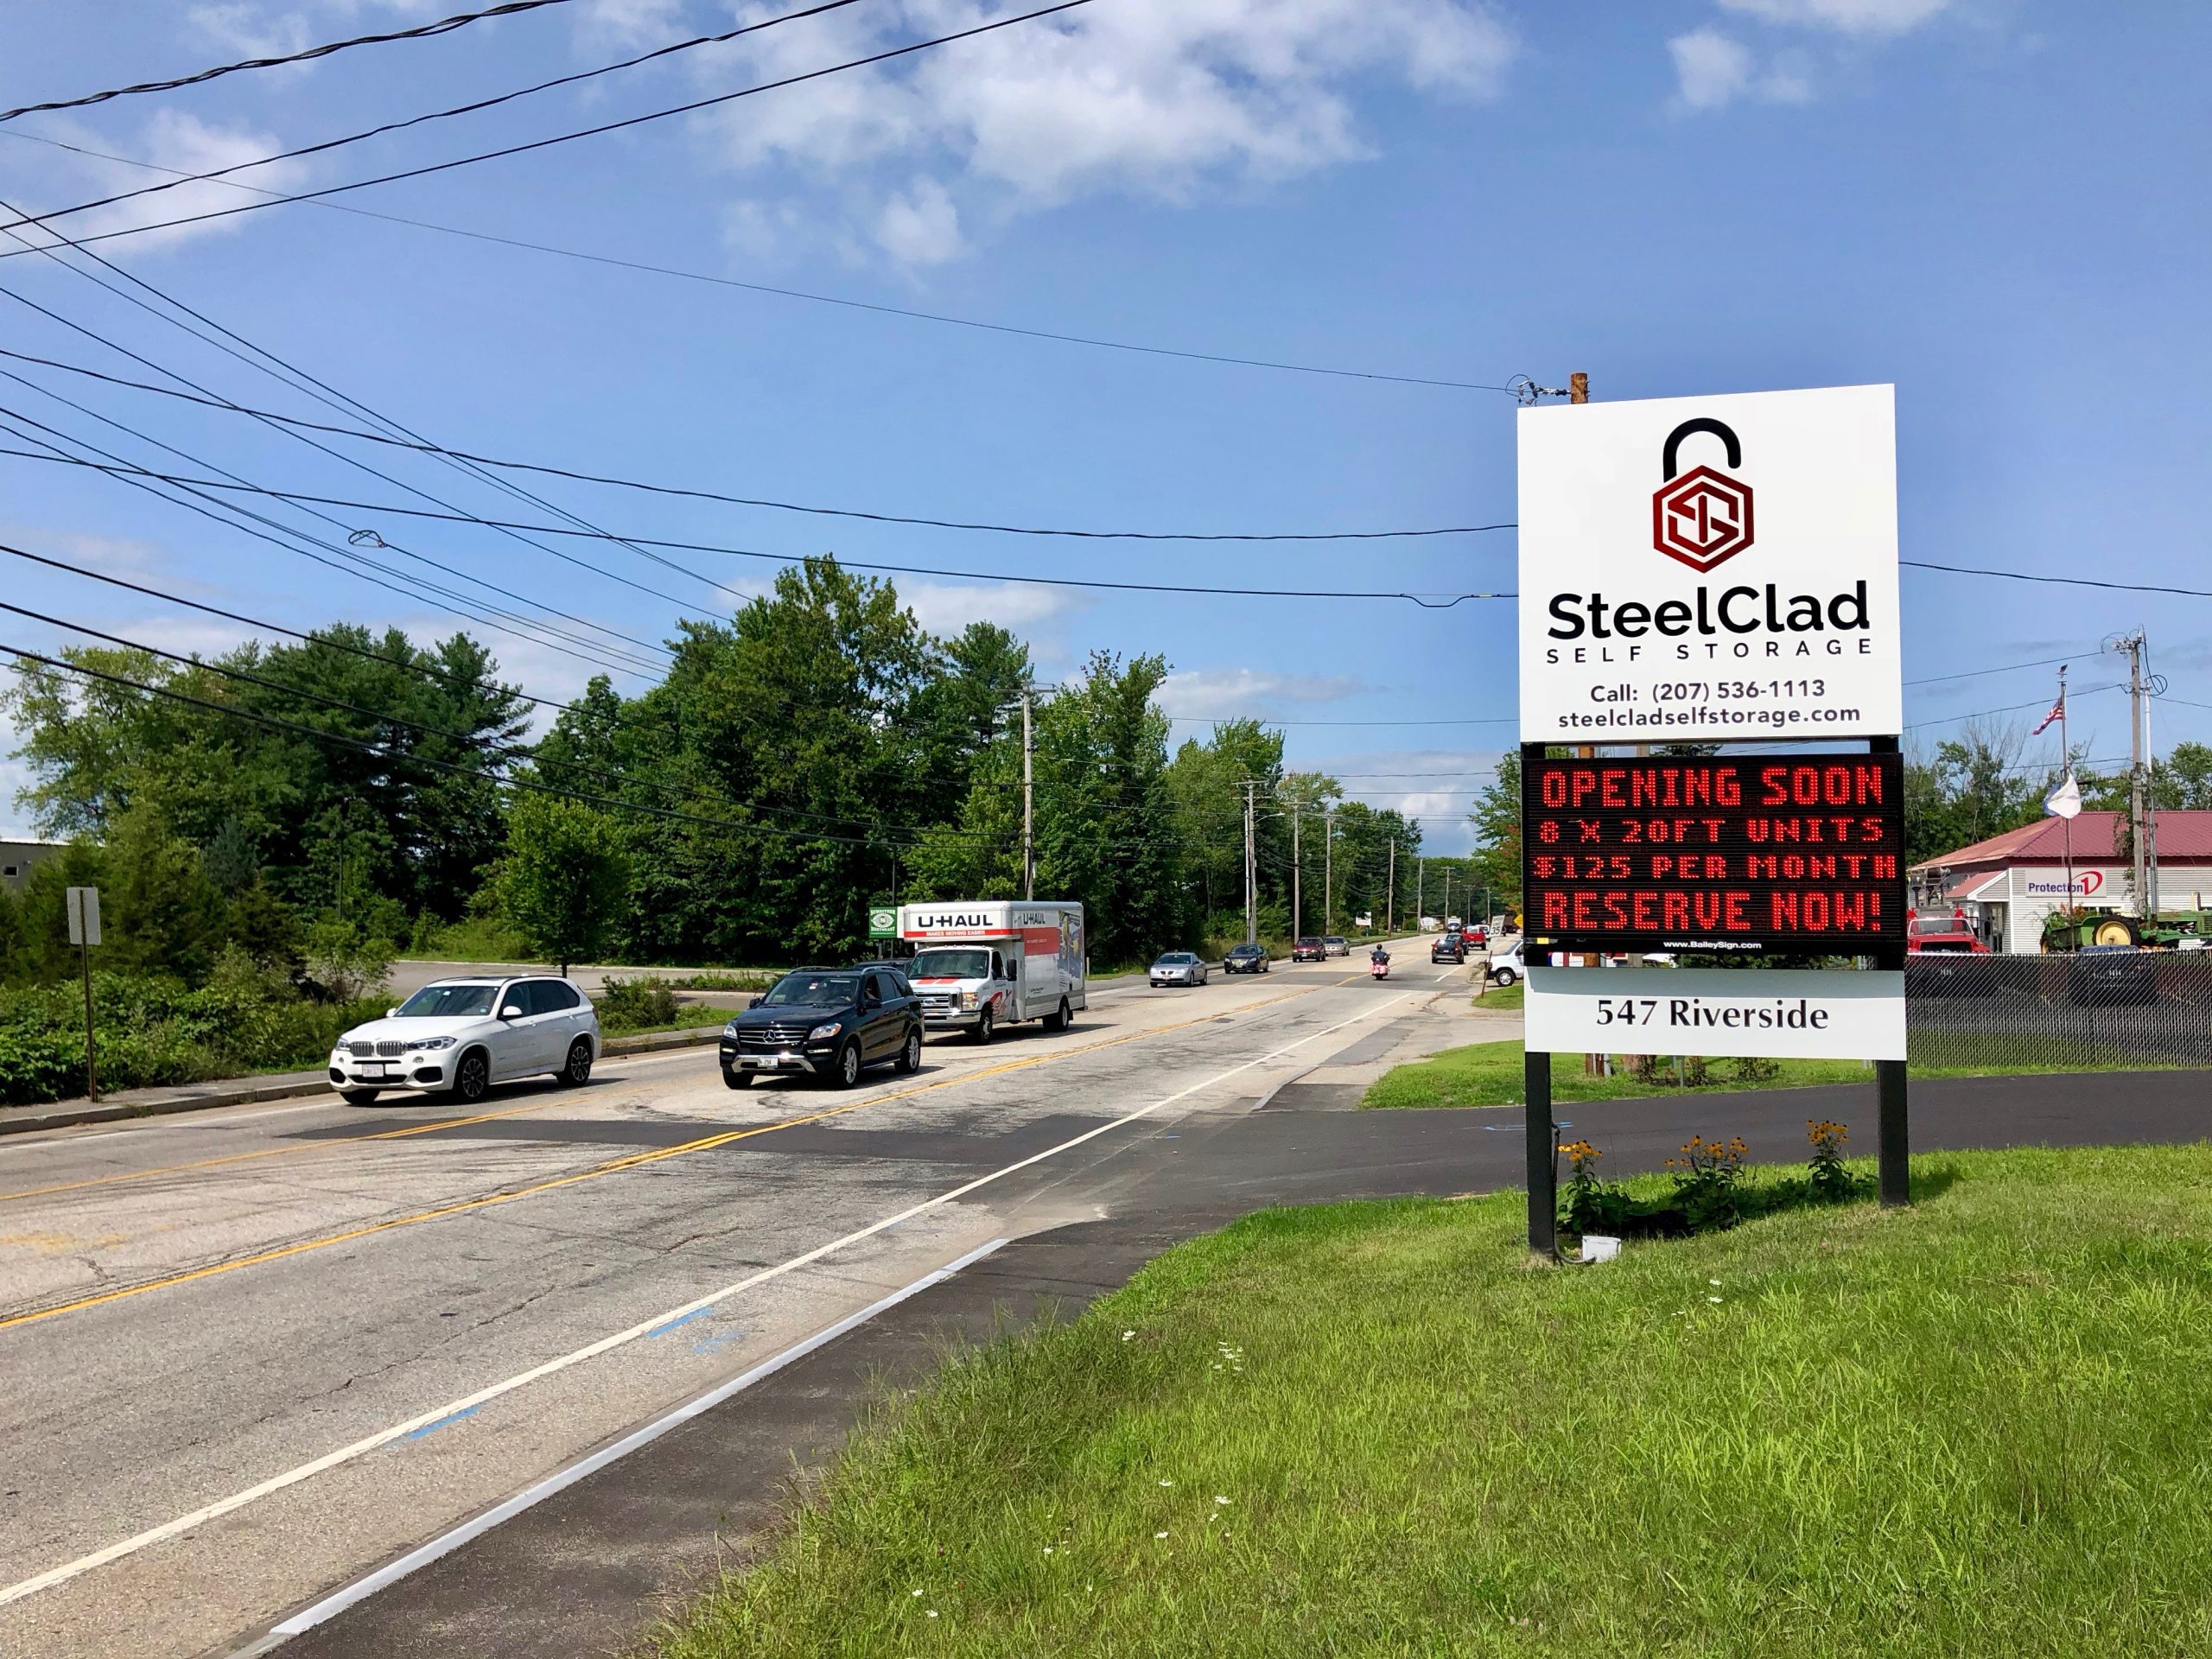 SteelClad Storage Reserve Now!